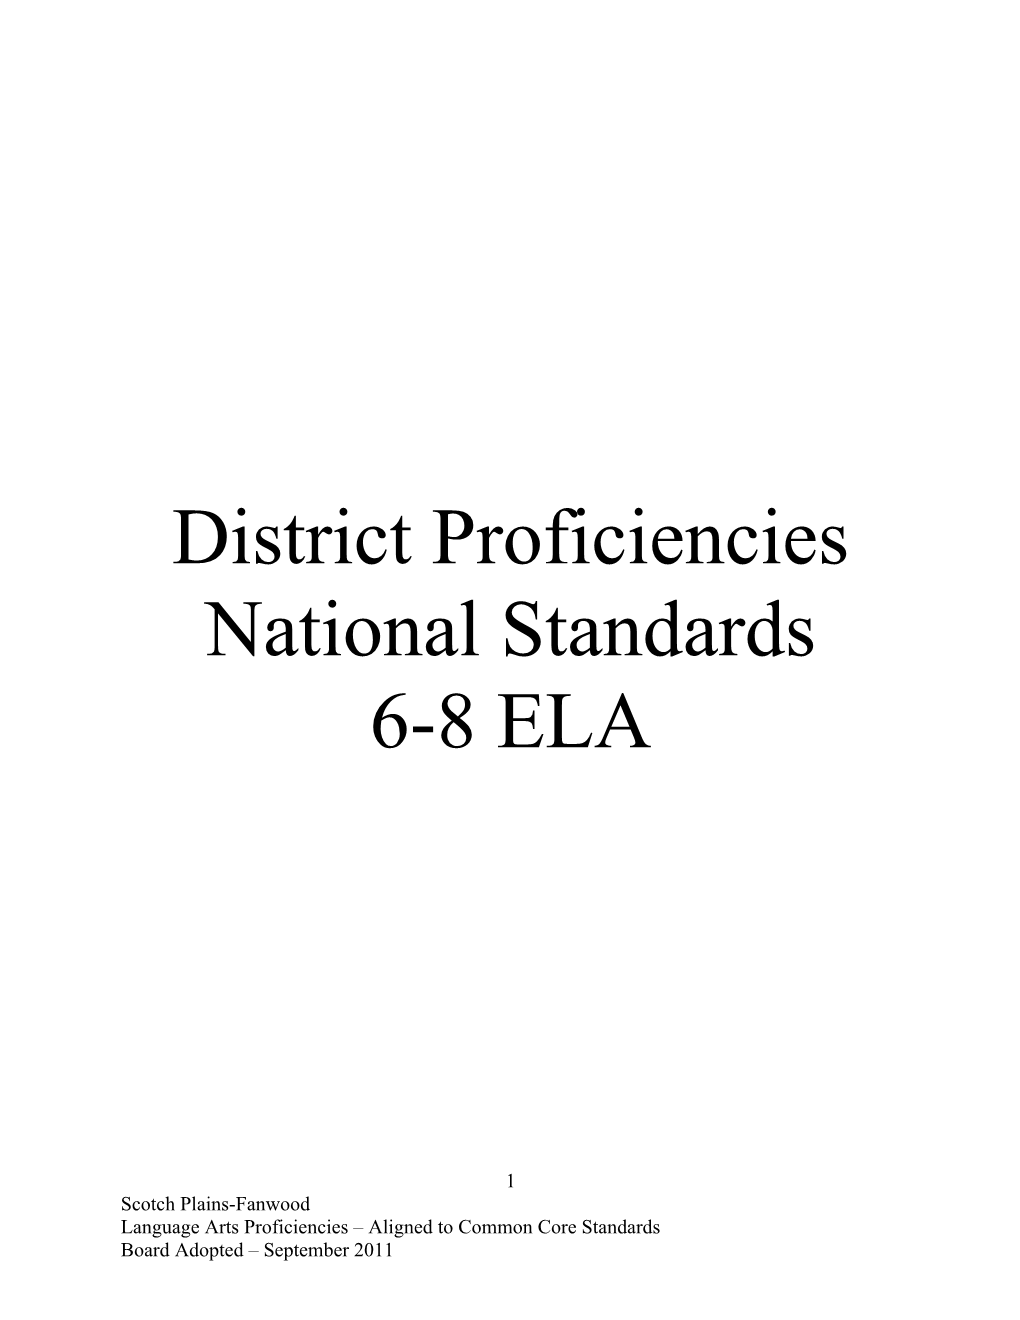 District Proficiencies National Standards